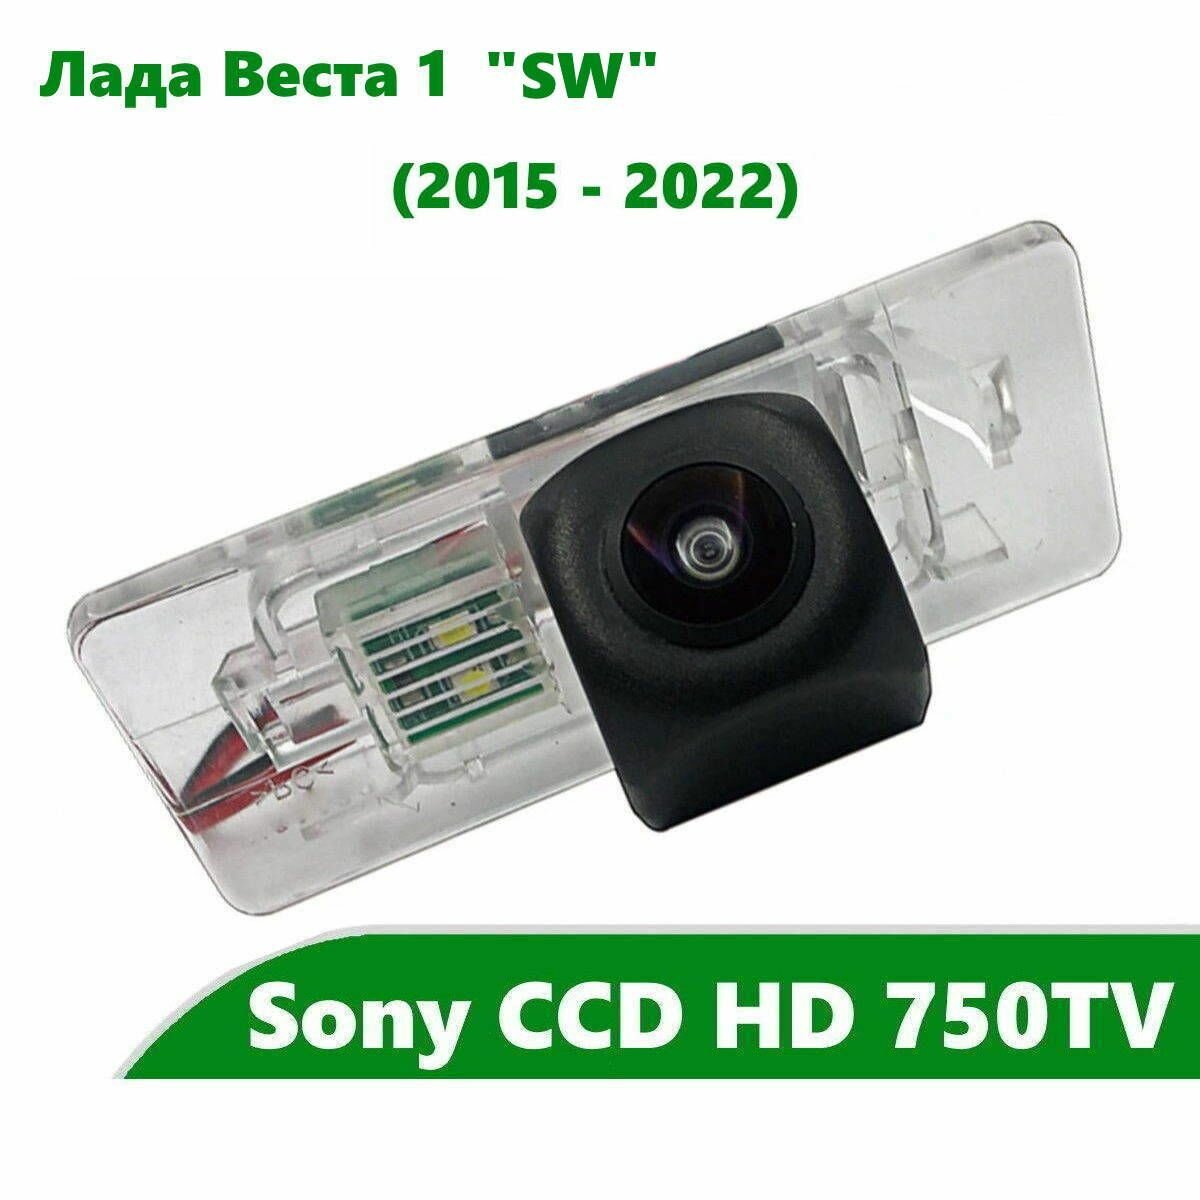 Камера заднего вида CCD HD для Lada Vesta 1 (2015 - 2022) "SW"